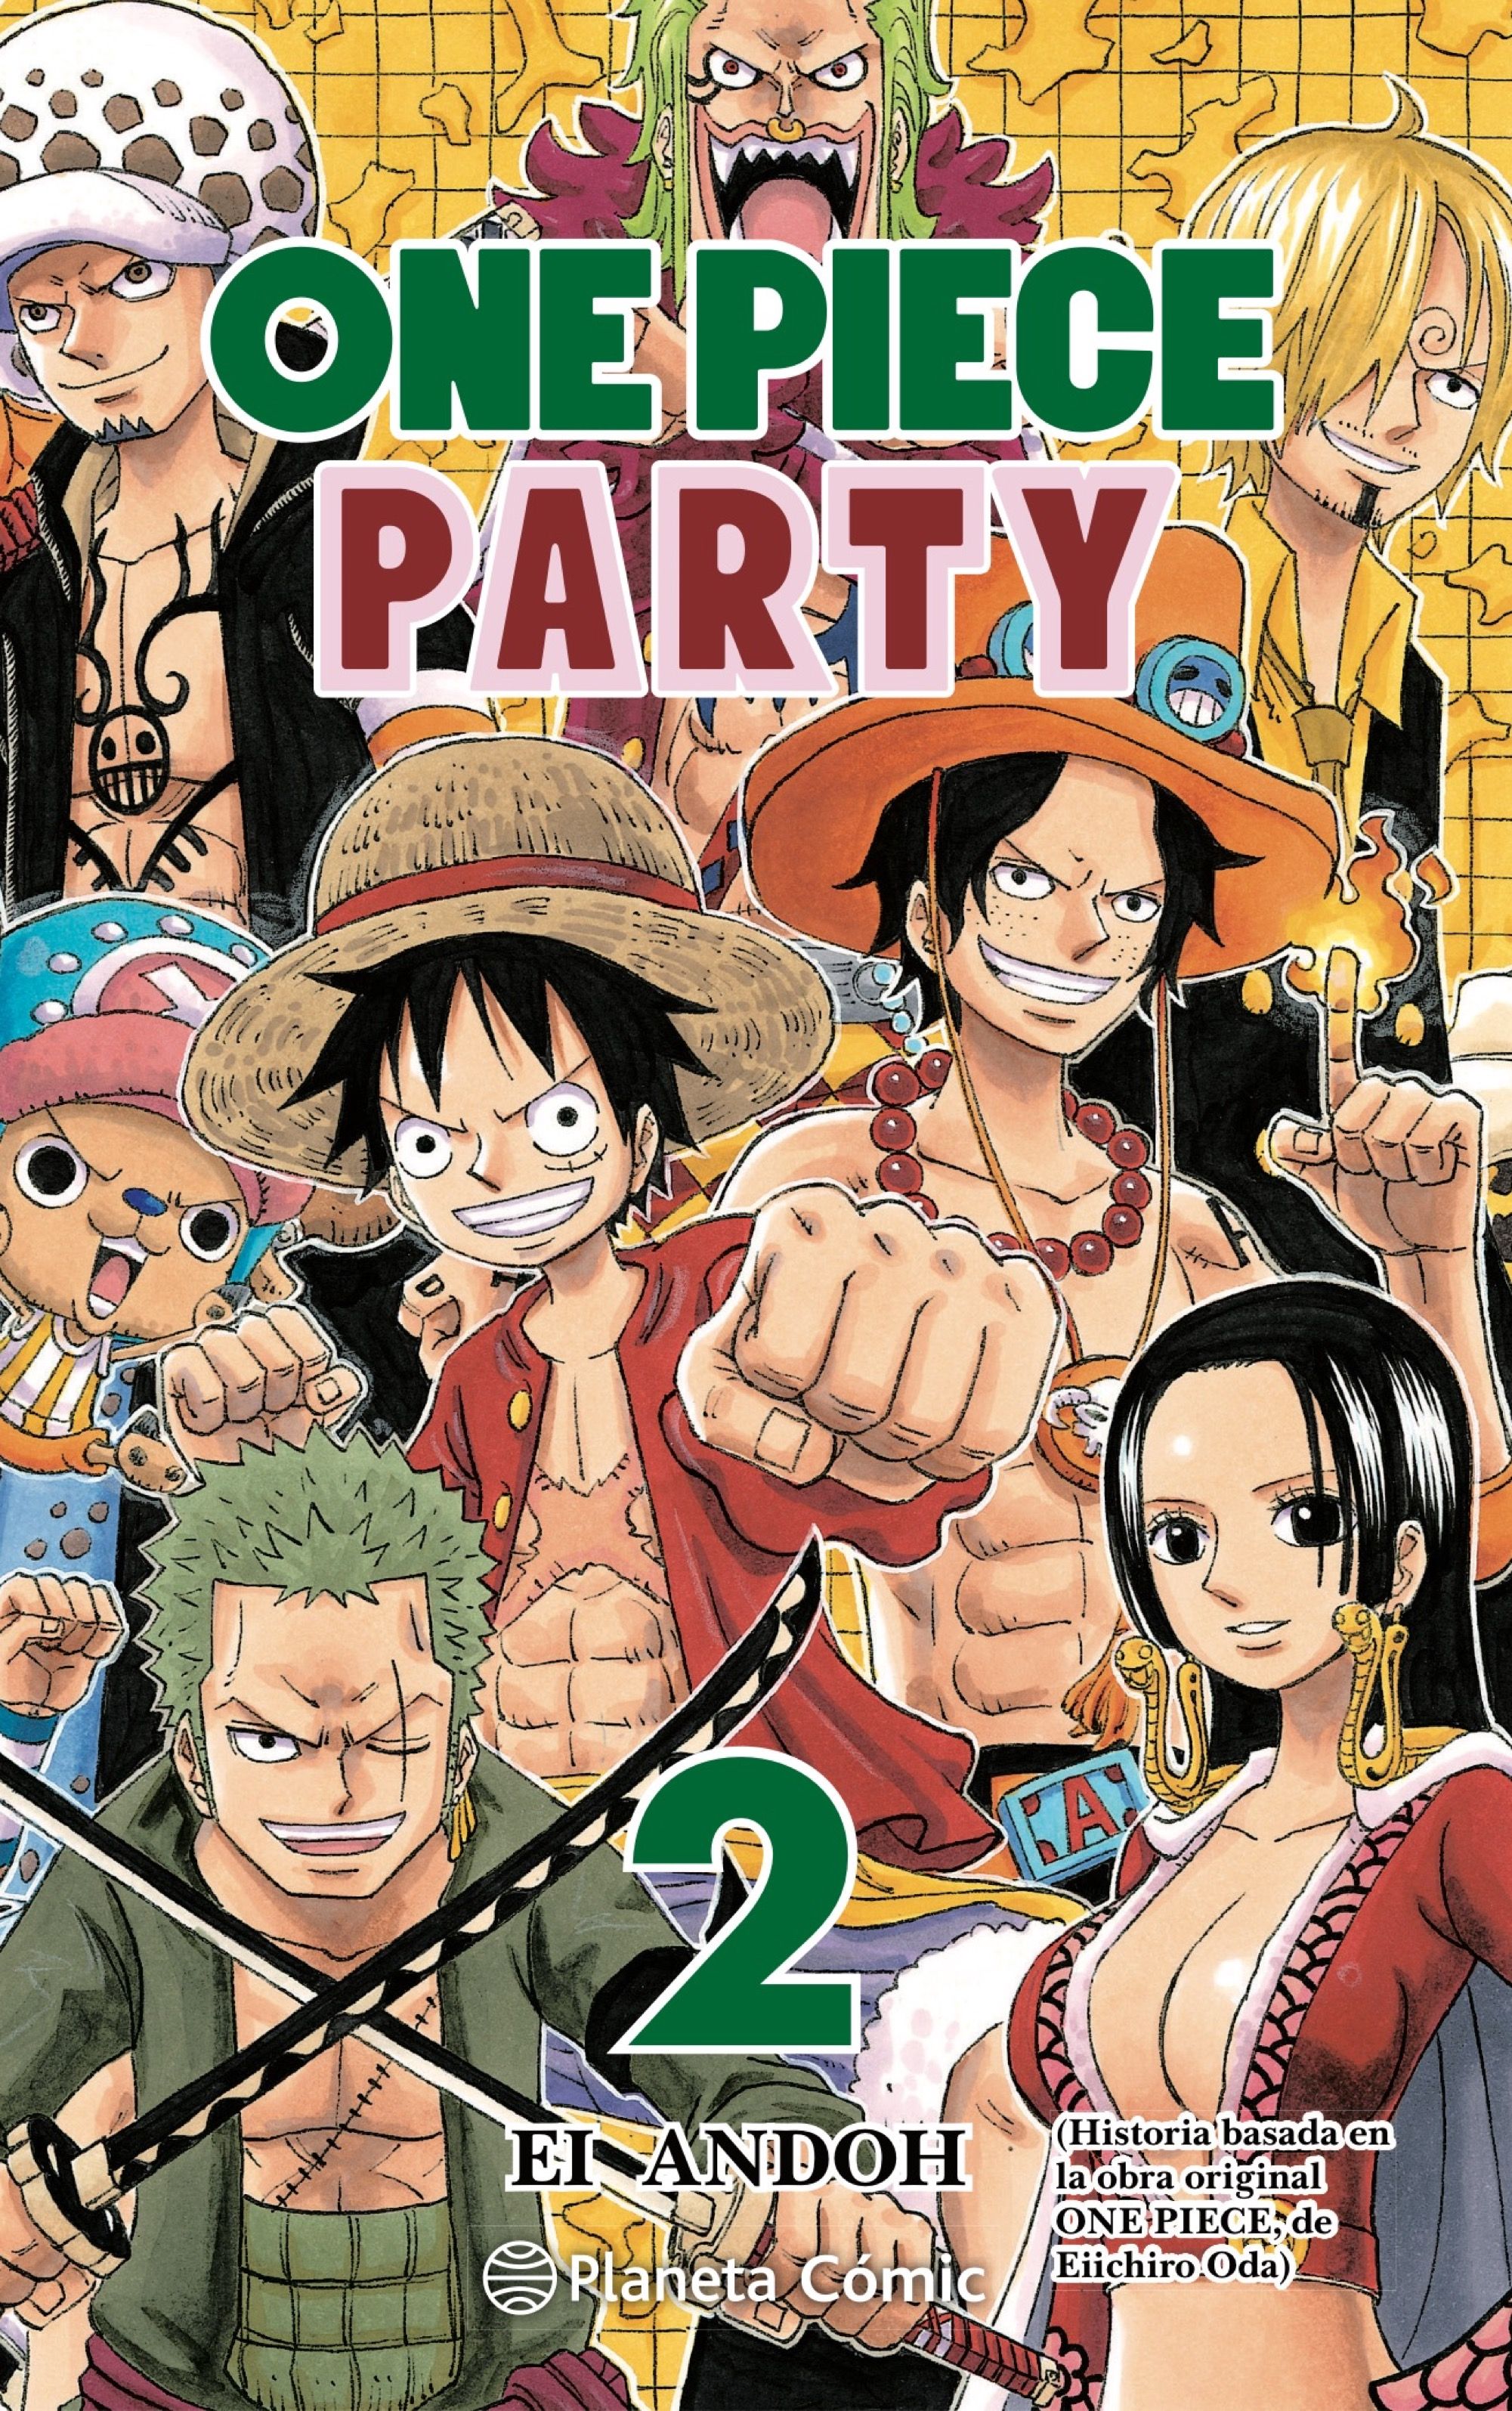 Reseña del manga One Piece Party n.º 2